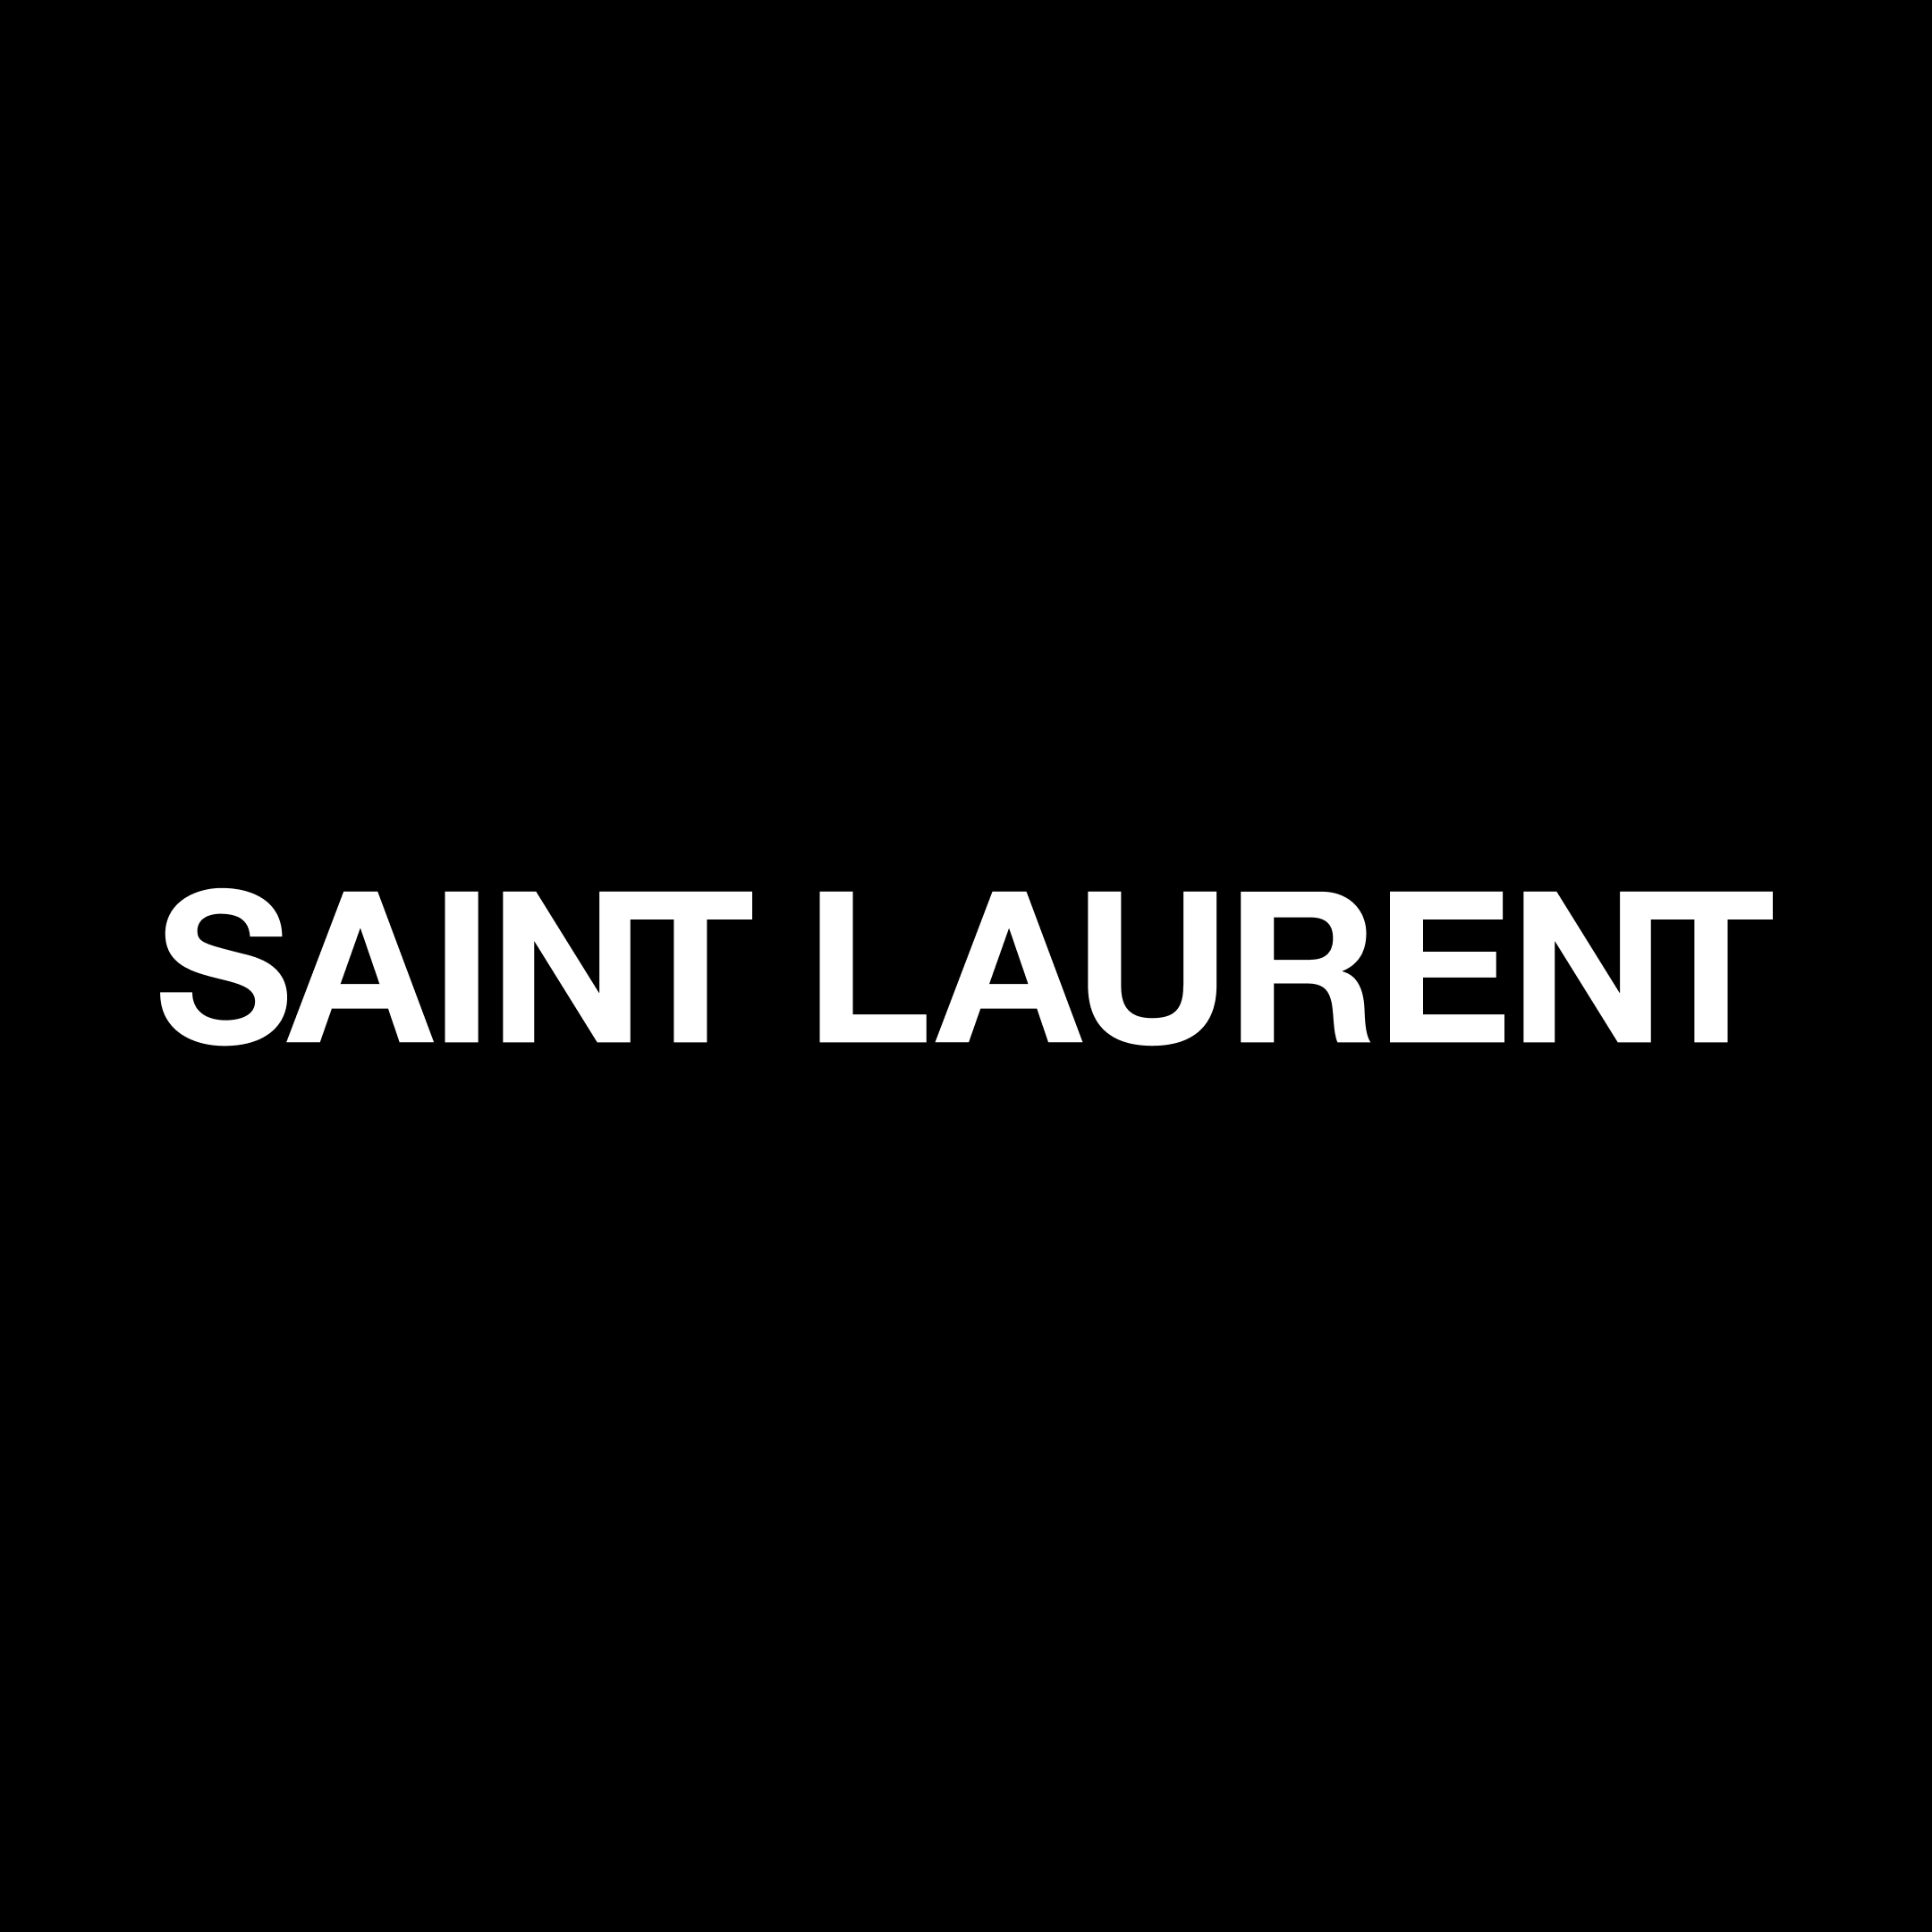 Saint Laurent Wailea (808)500-6898